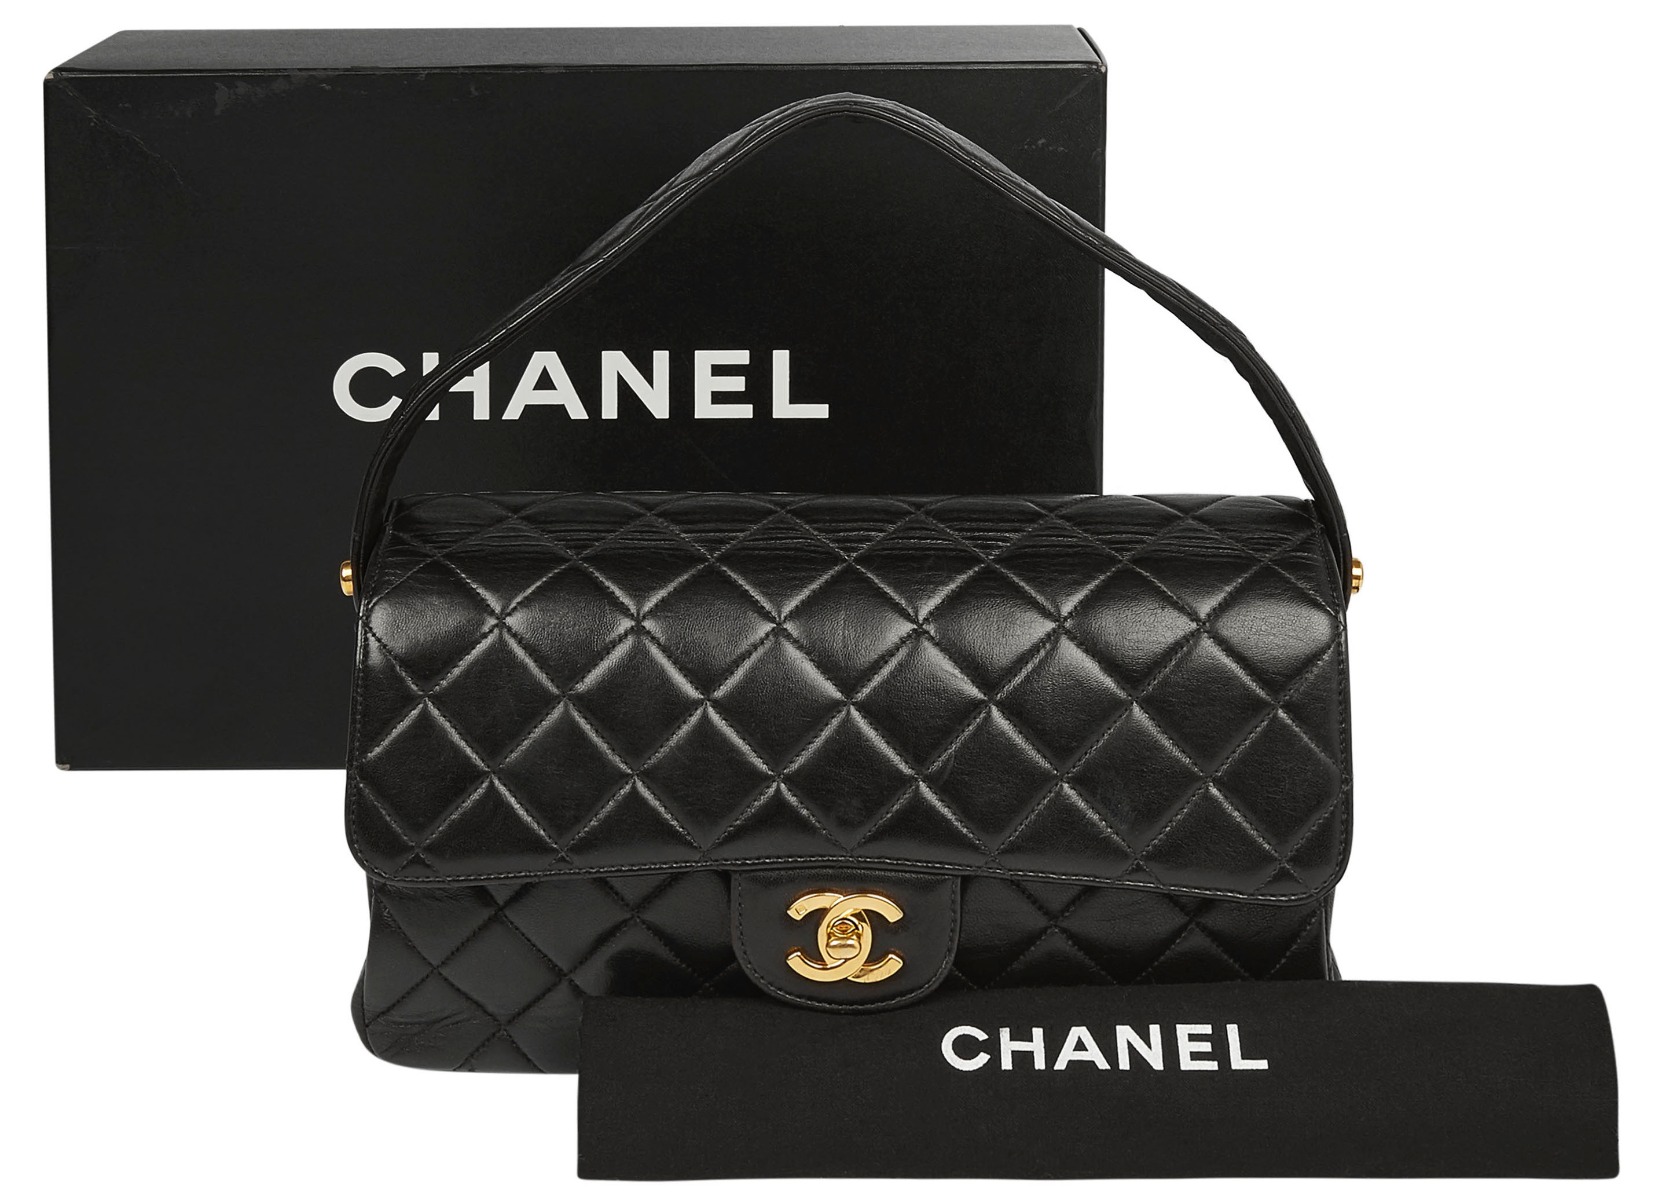 Iconic Chanel